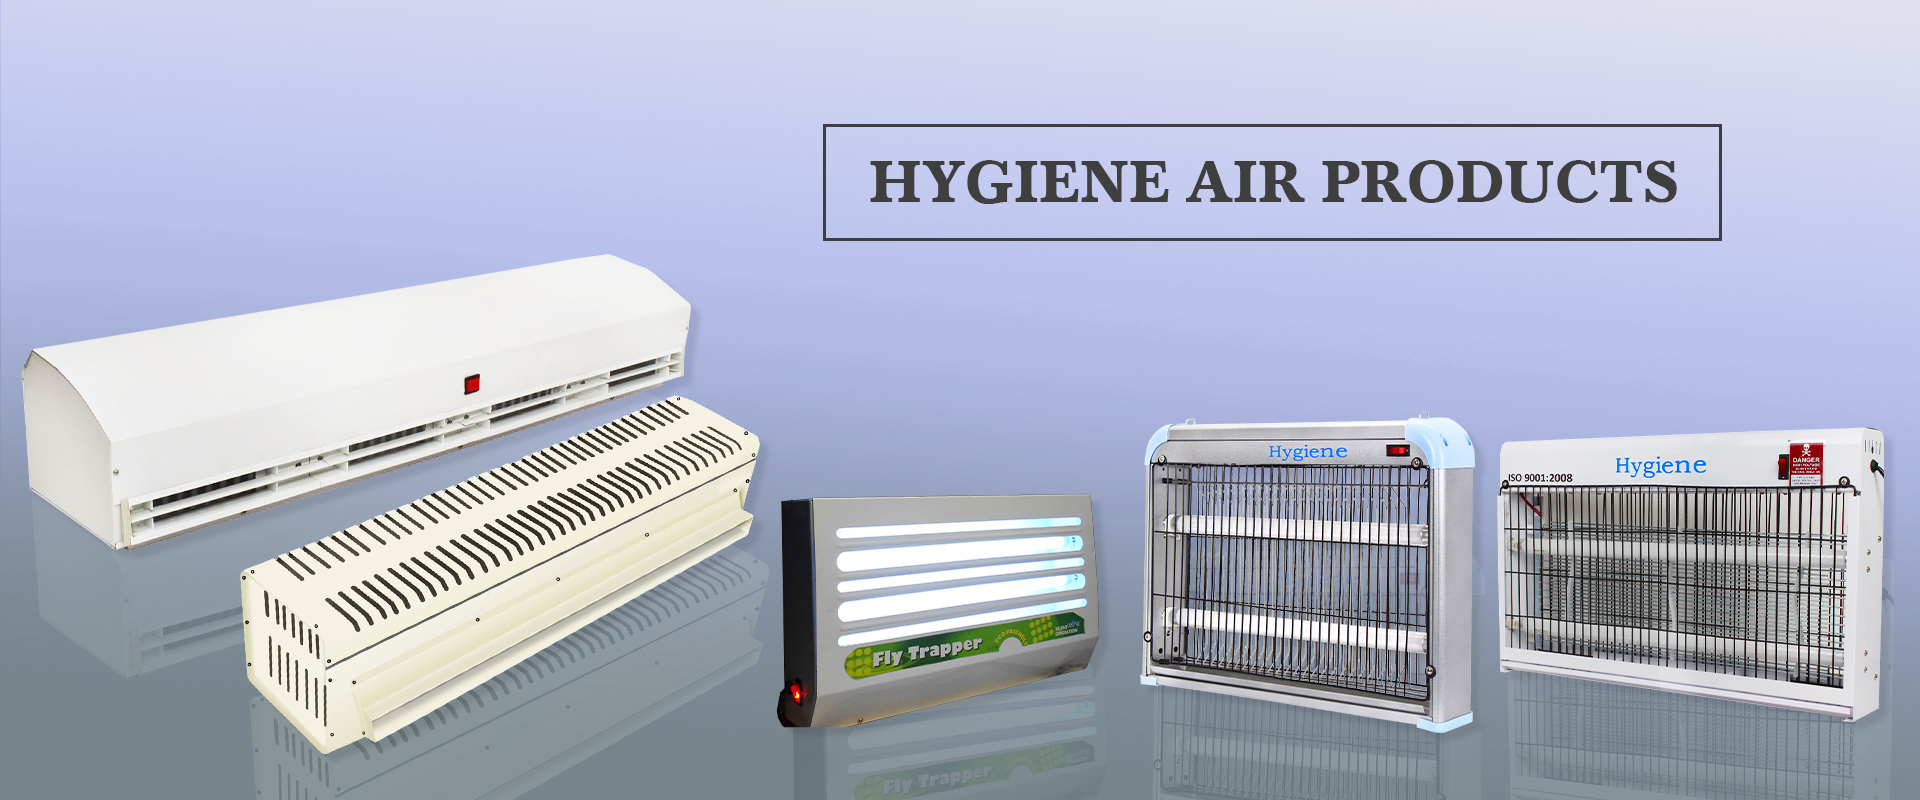 Hygiene Air Products